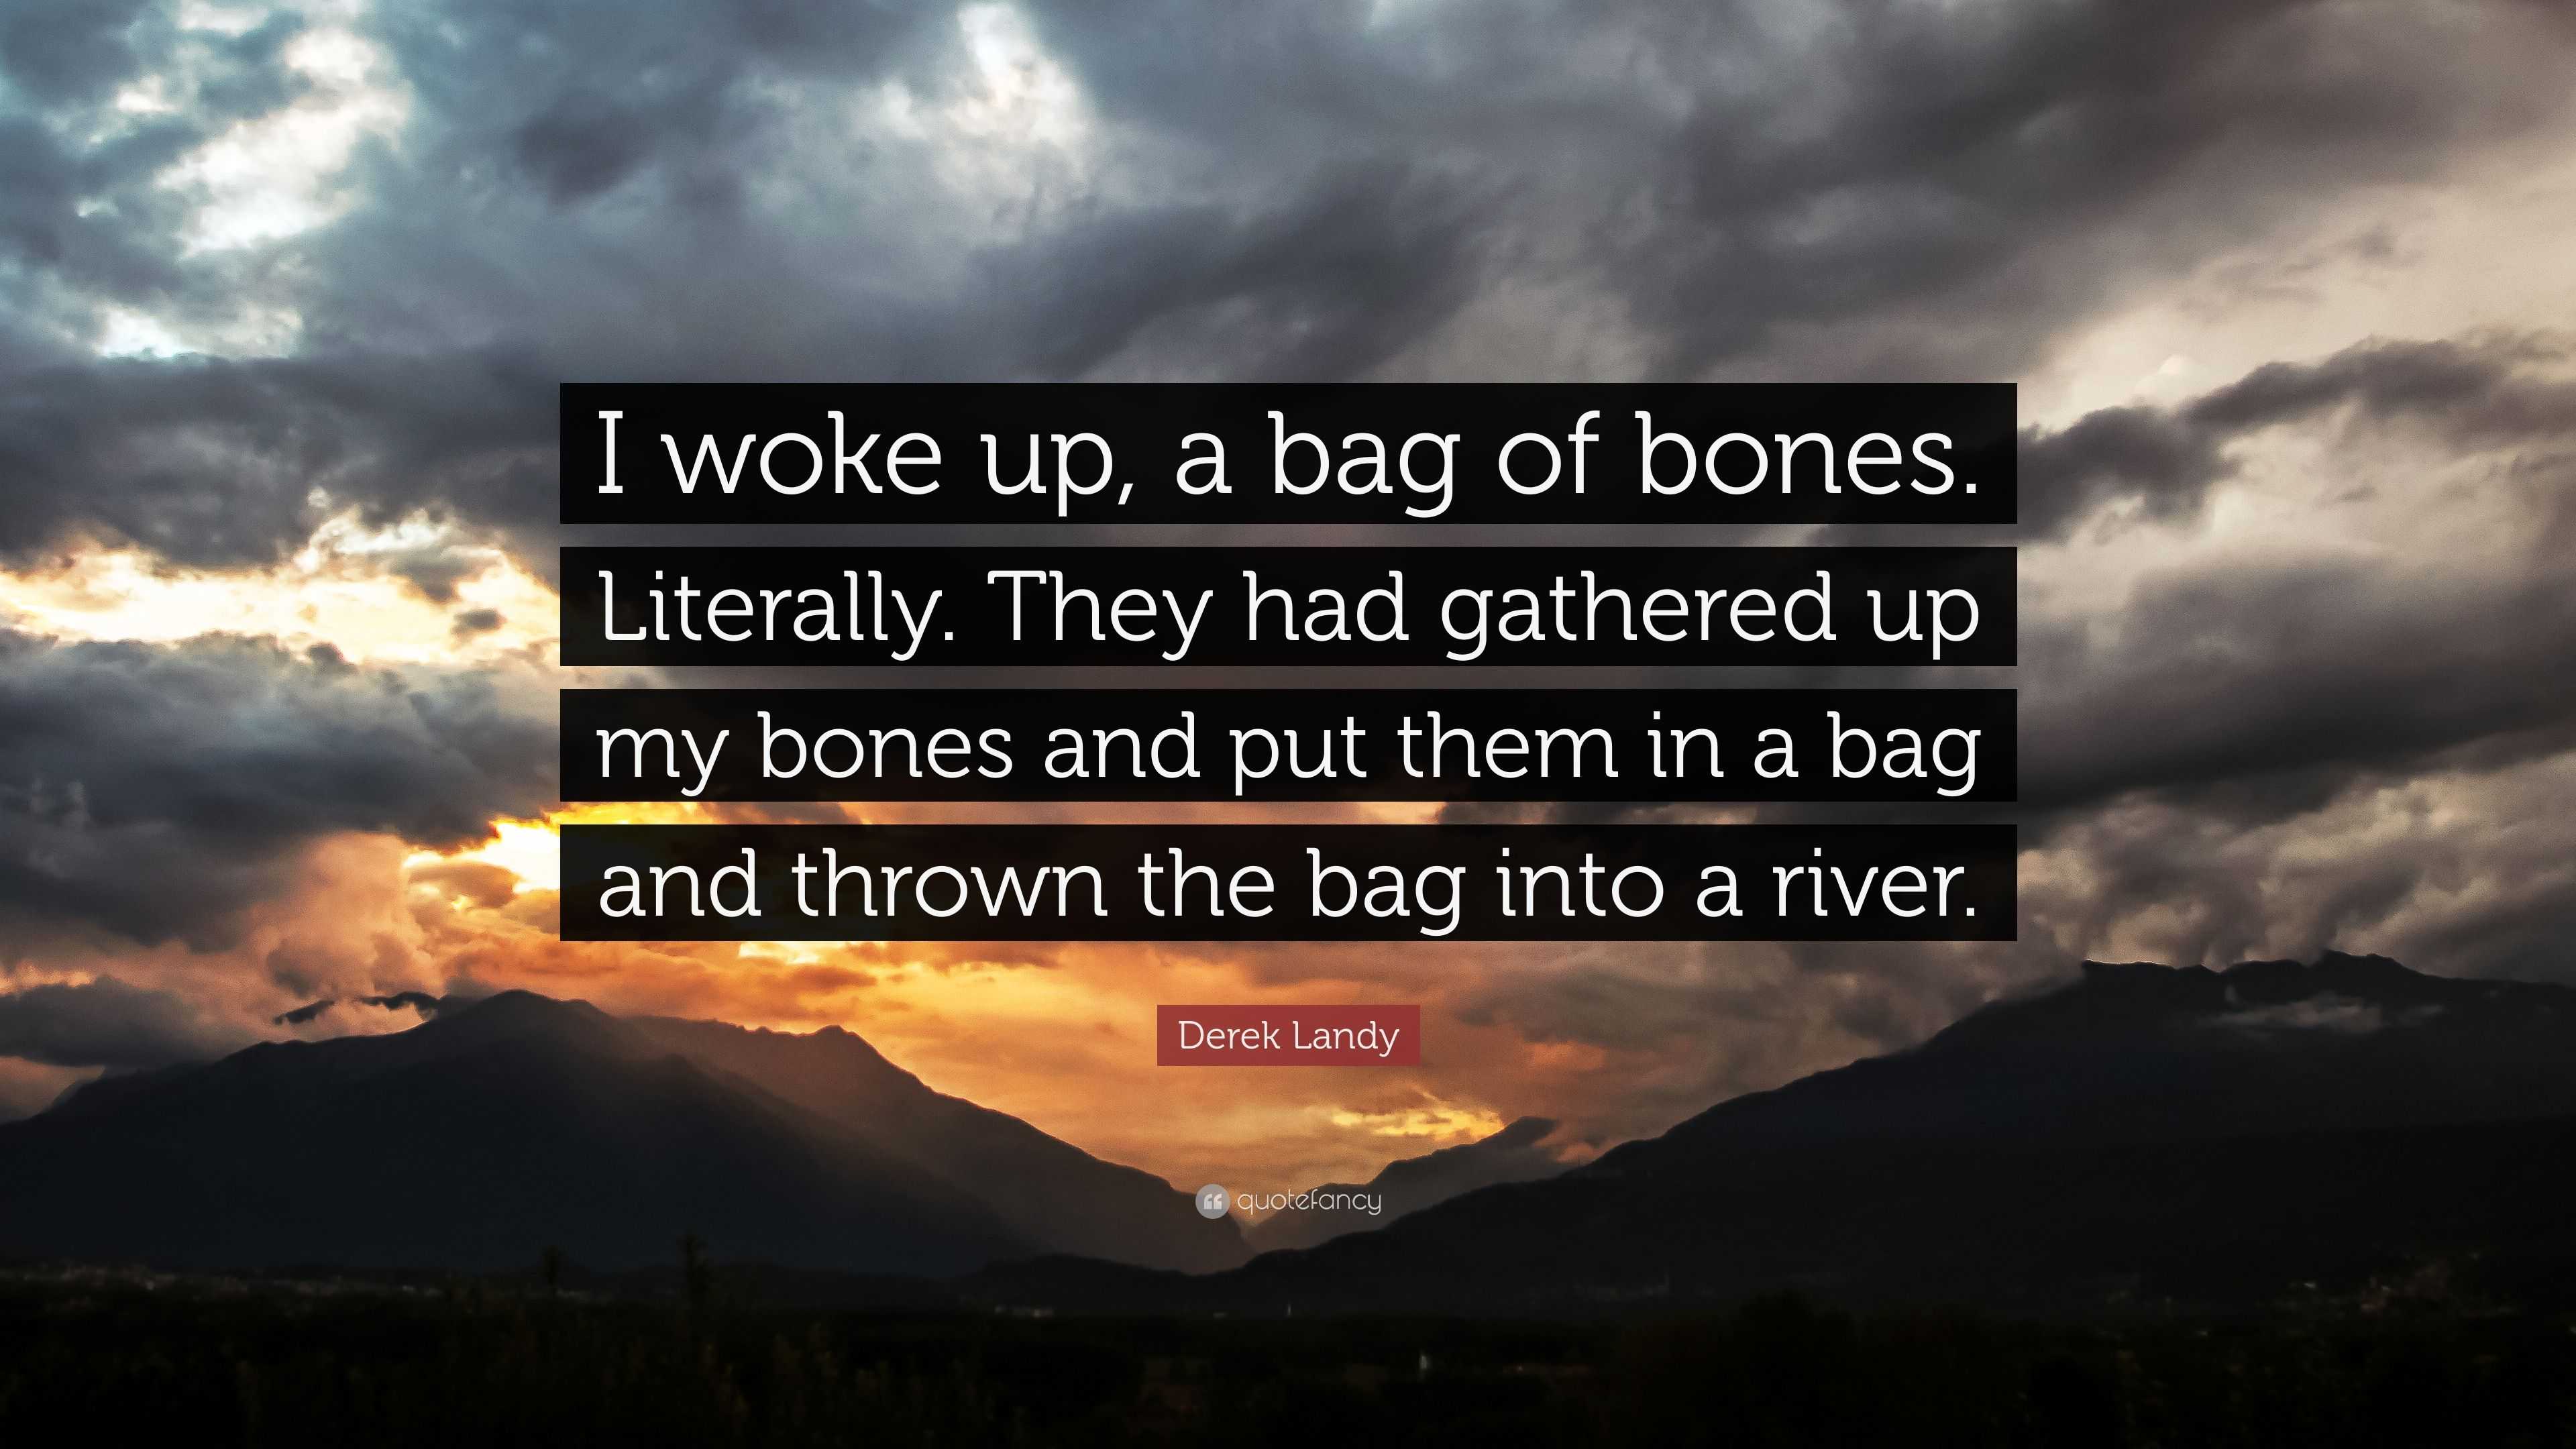 Mitski - Bag of Bones (Official Audio) - YouTube